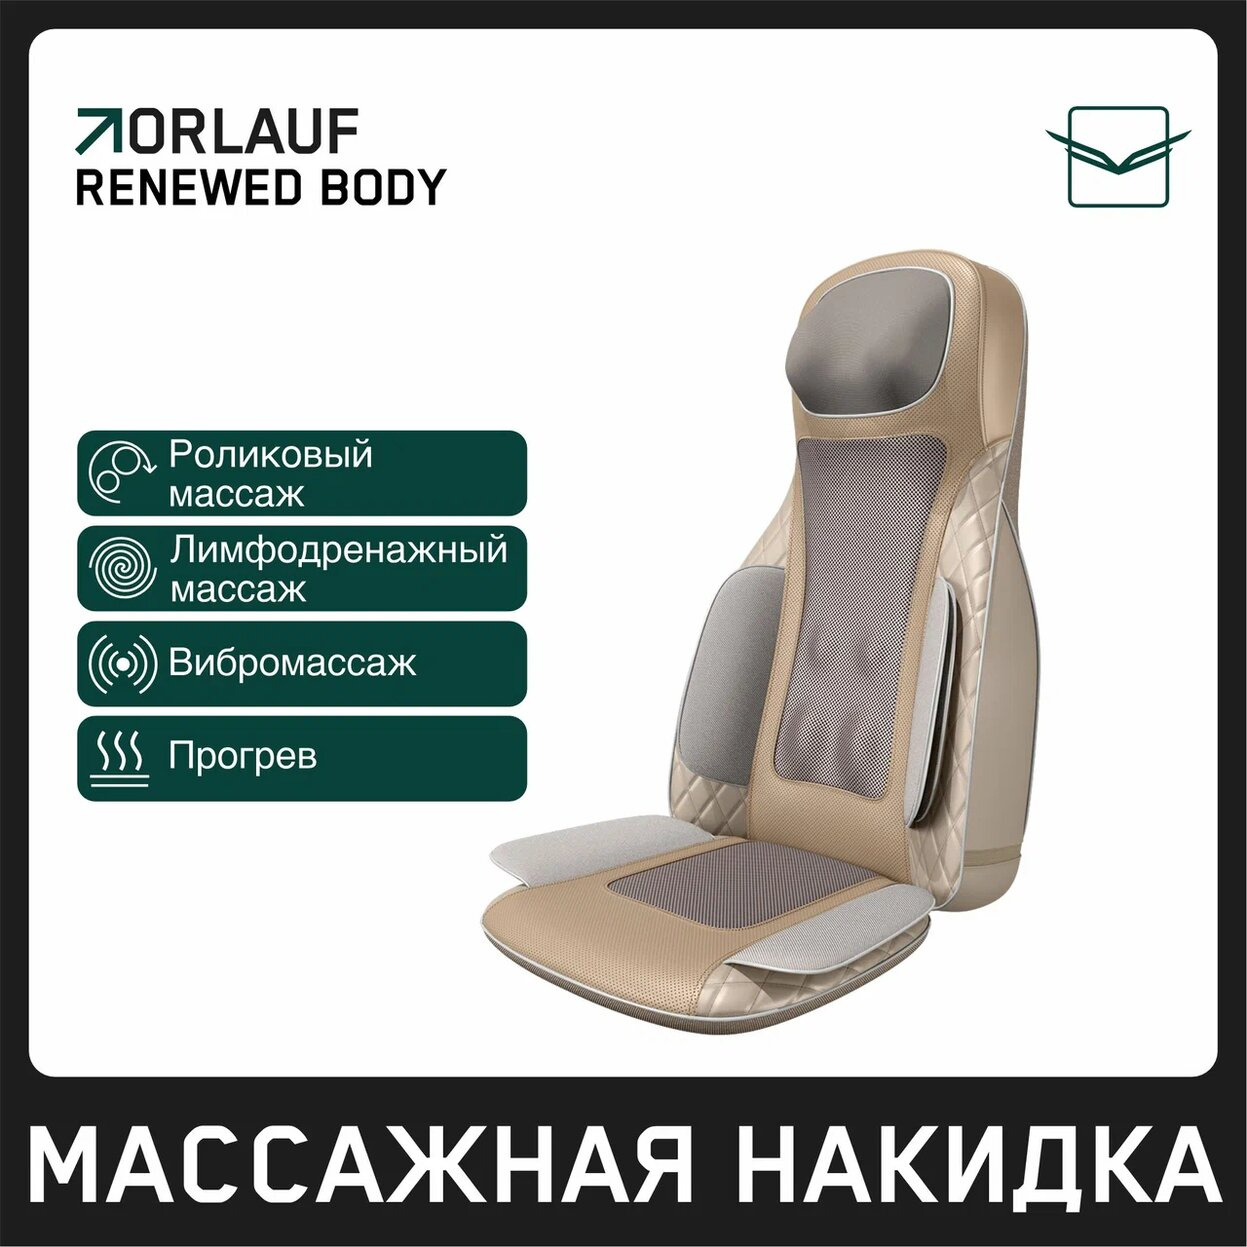 Orlauf Renewed Body из каталога устройств для массажа в Перми по цене 39900 ₽